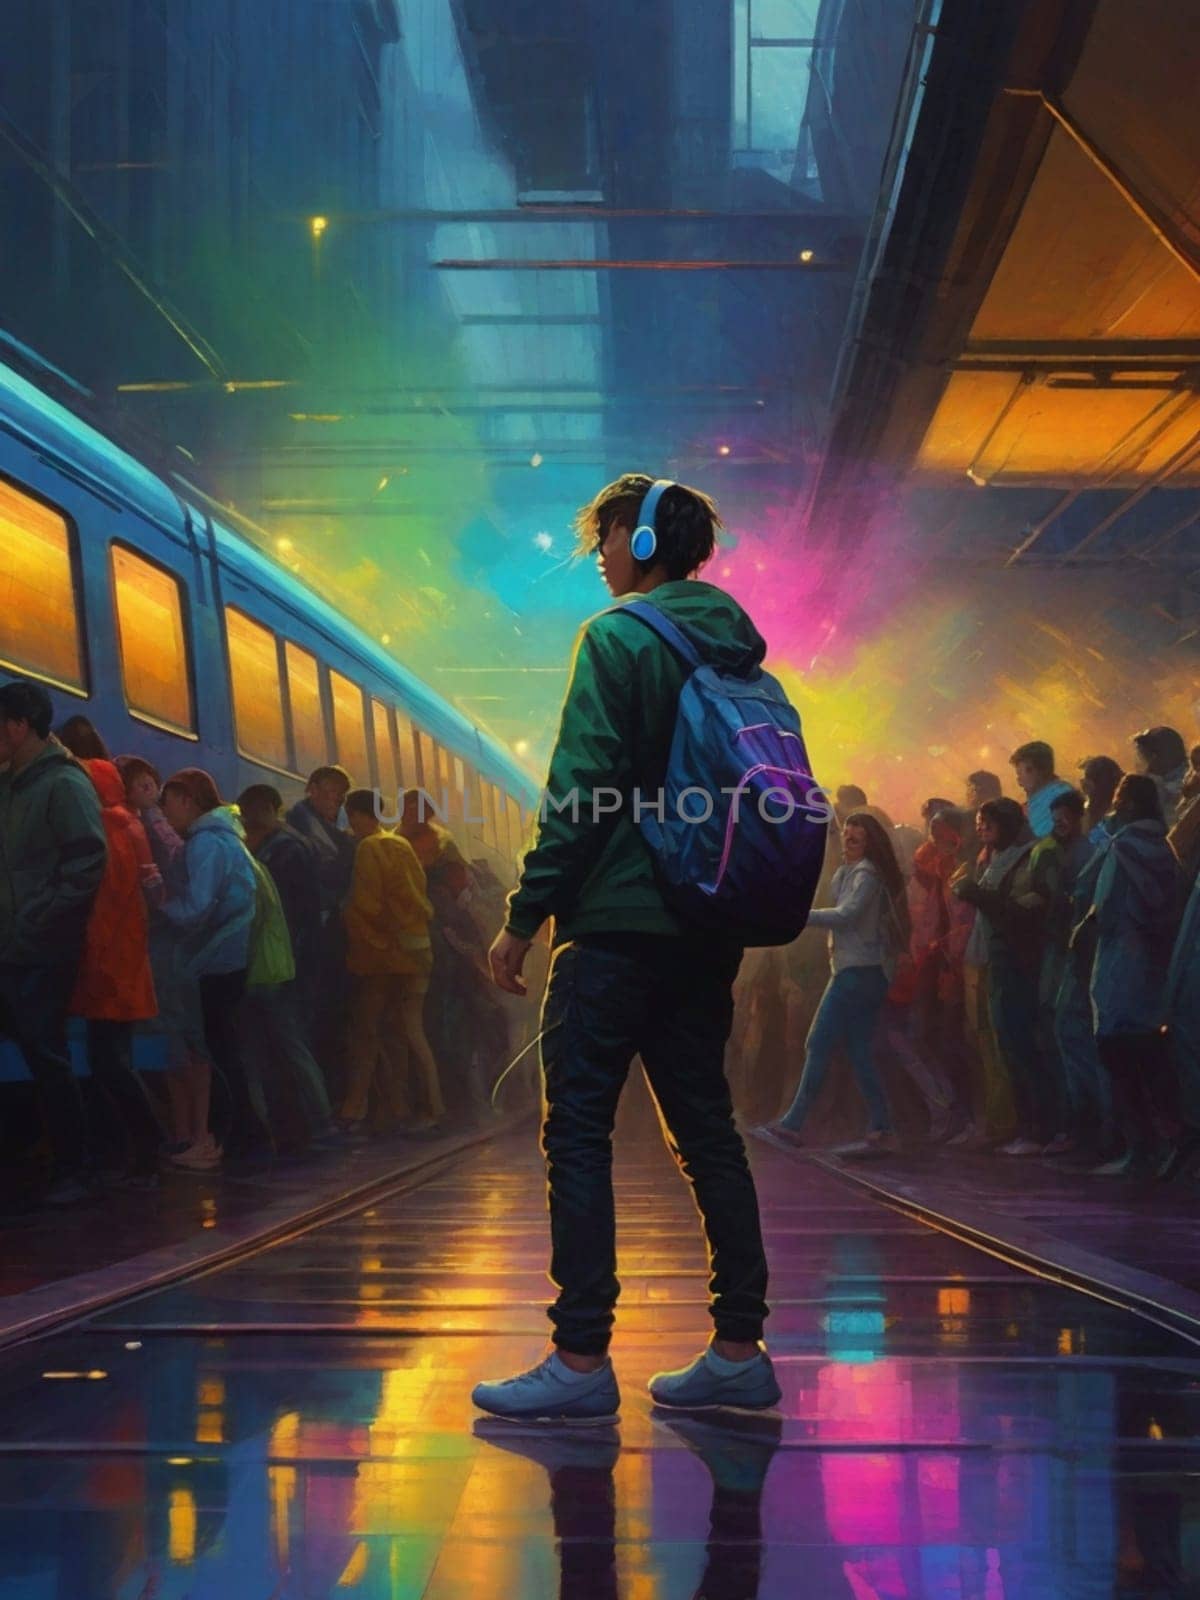 teen girl cmmute in train metro station wearing casual, earphone in a fantasy neon glow atmosphere by verbano